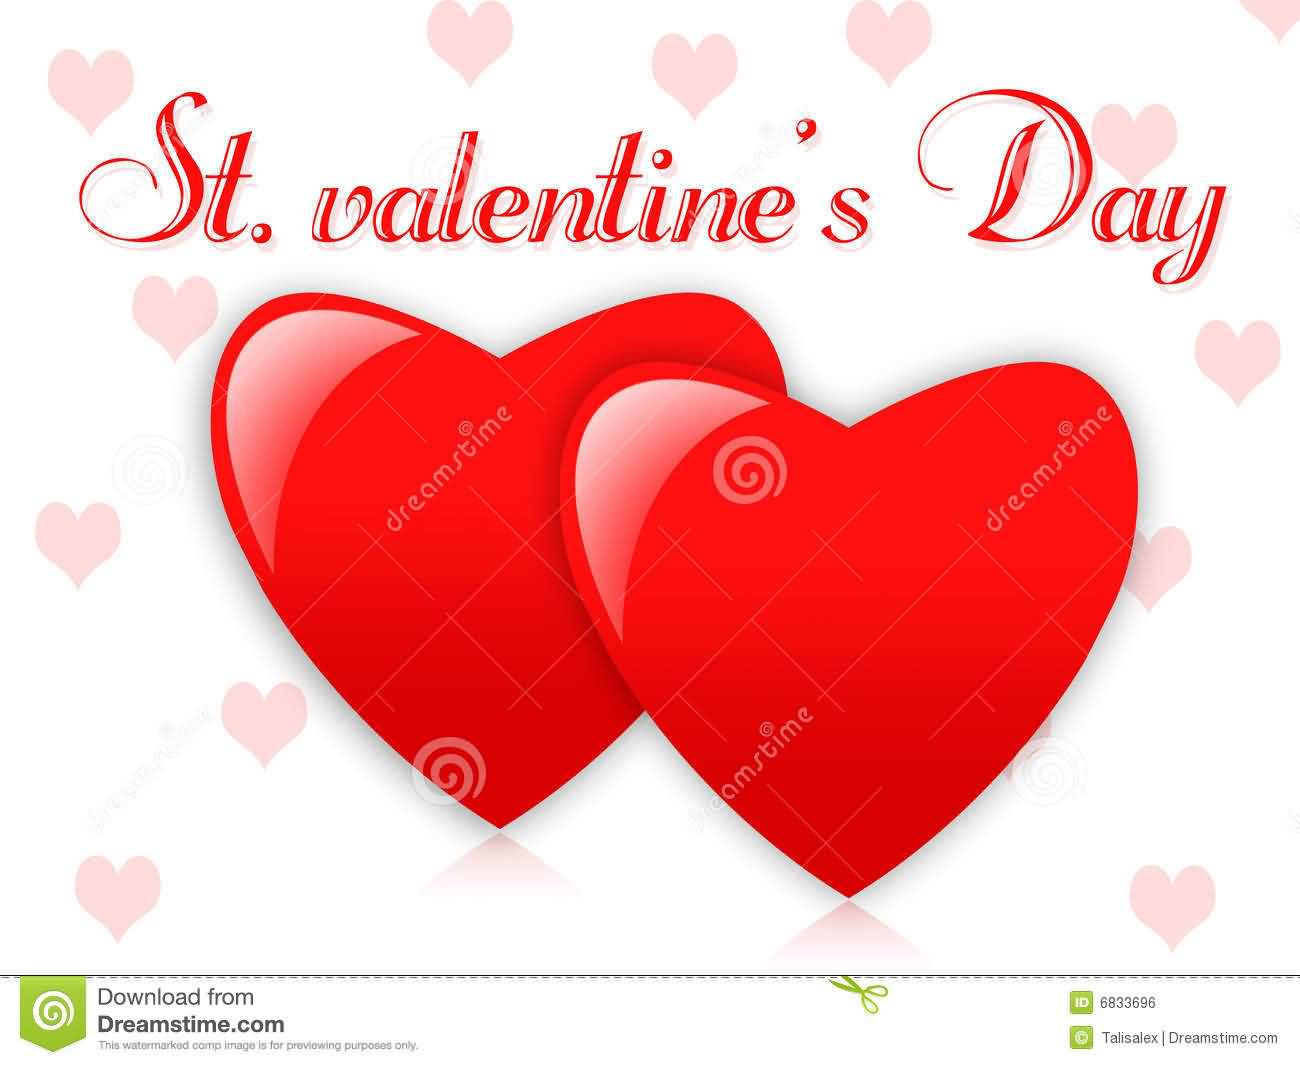 Saint Valentine's Day Two Hearts Illustration